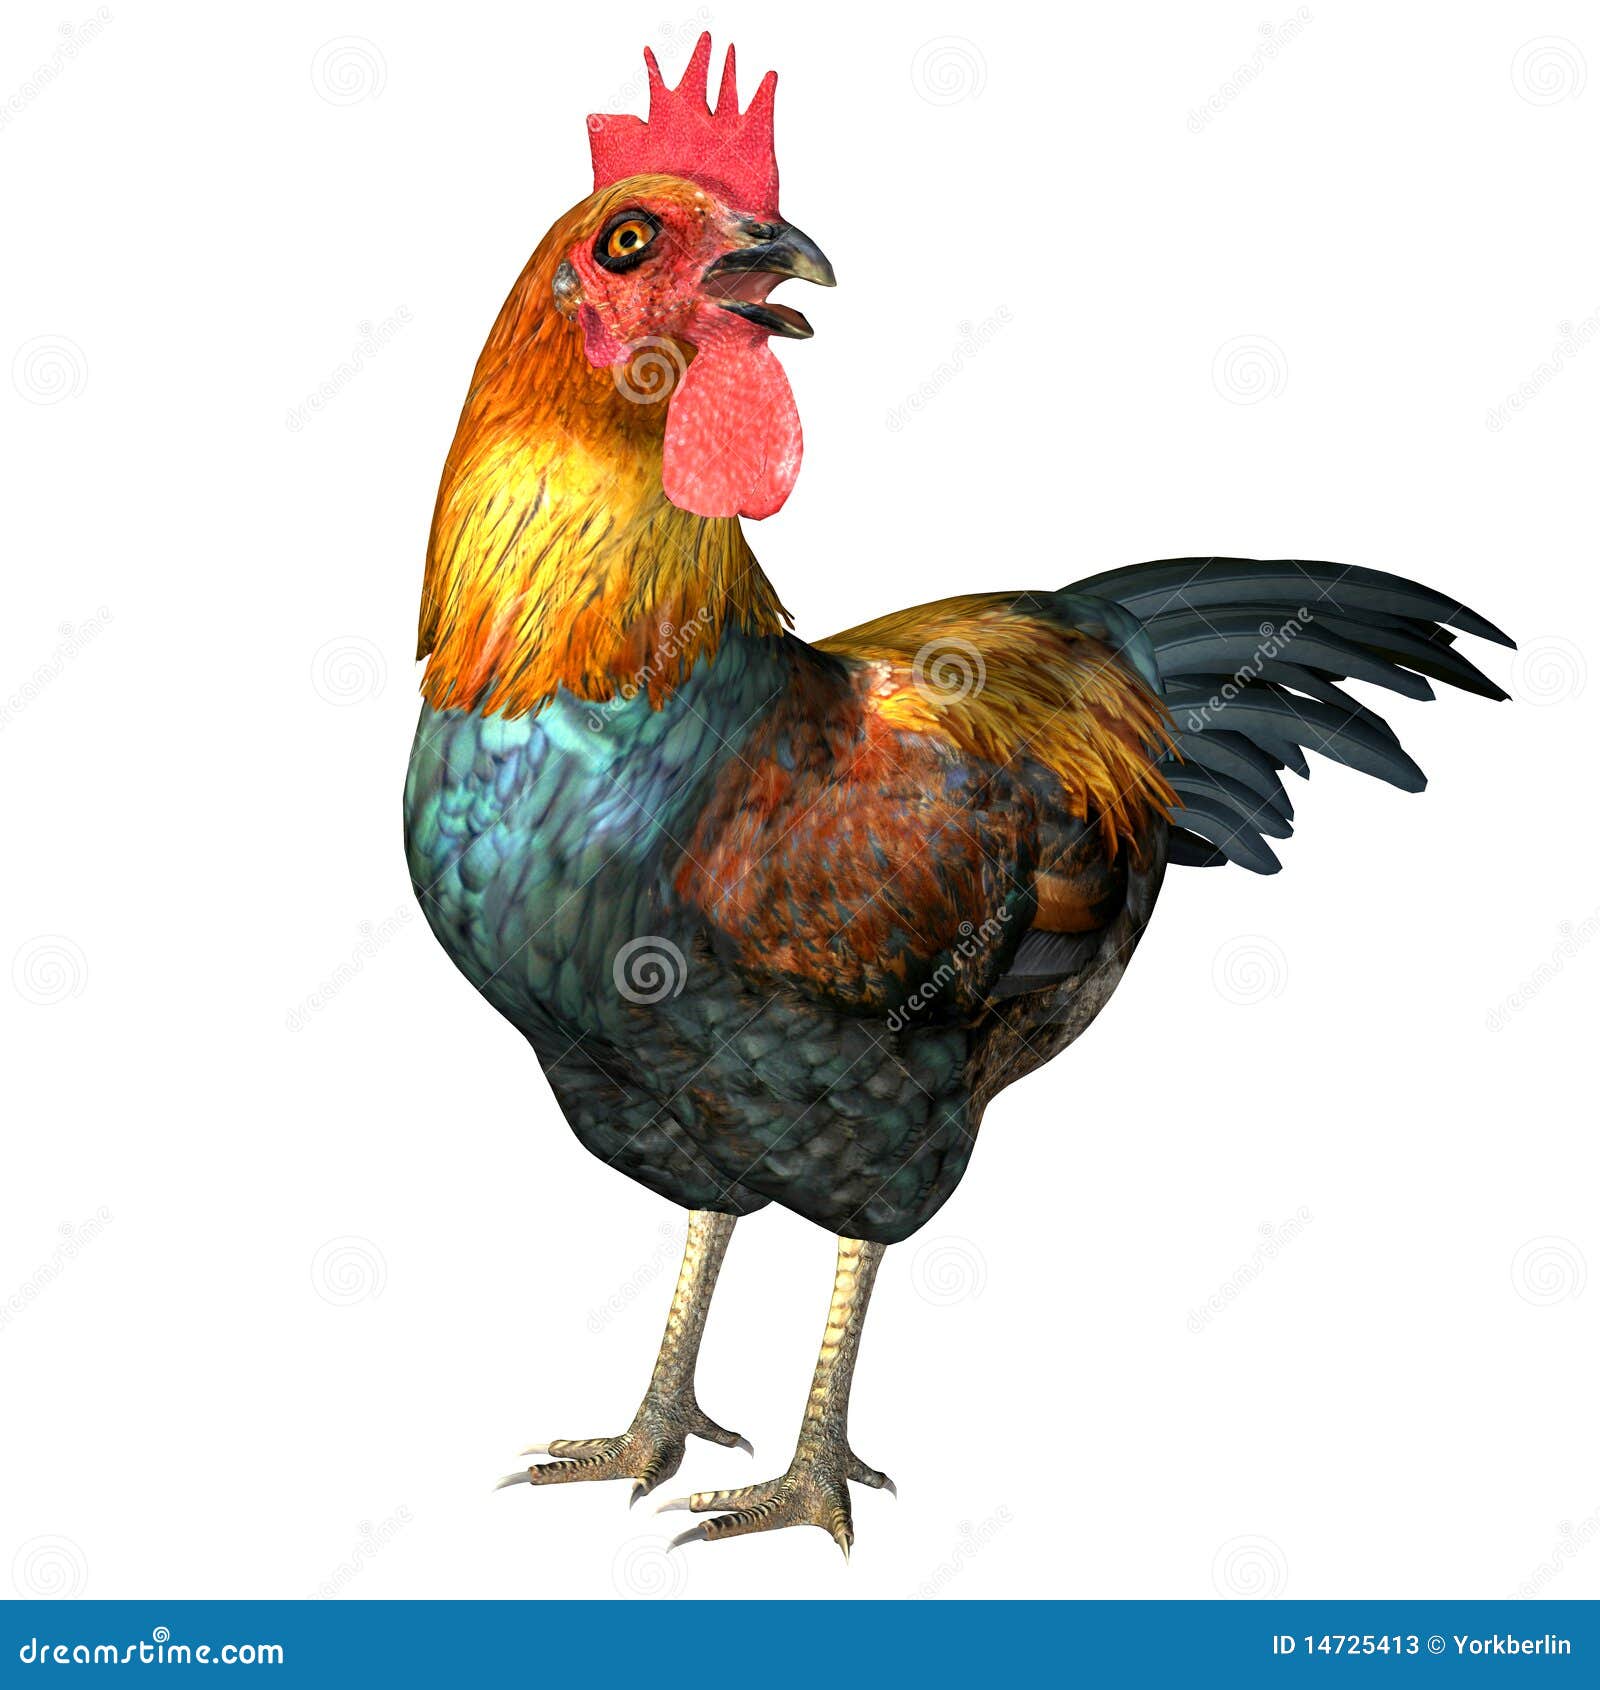 Cock Image 93